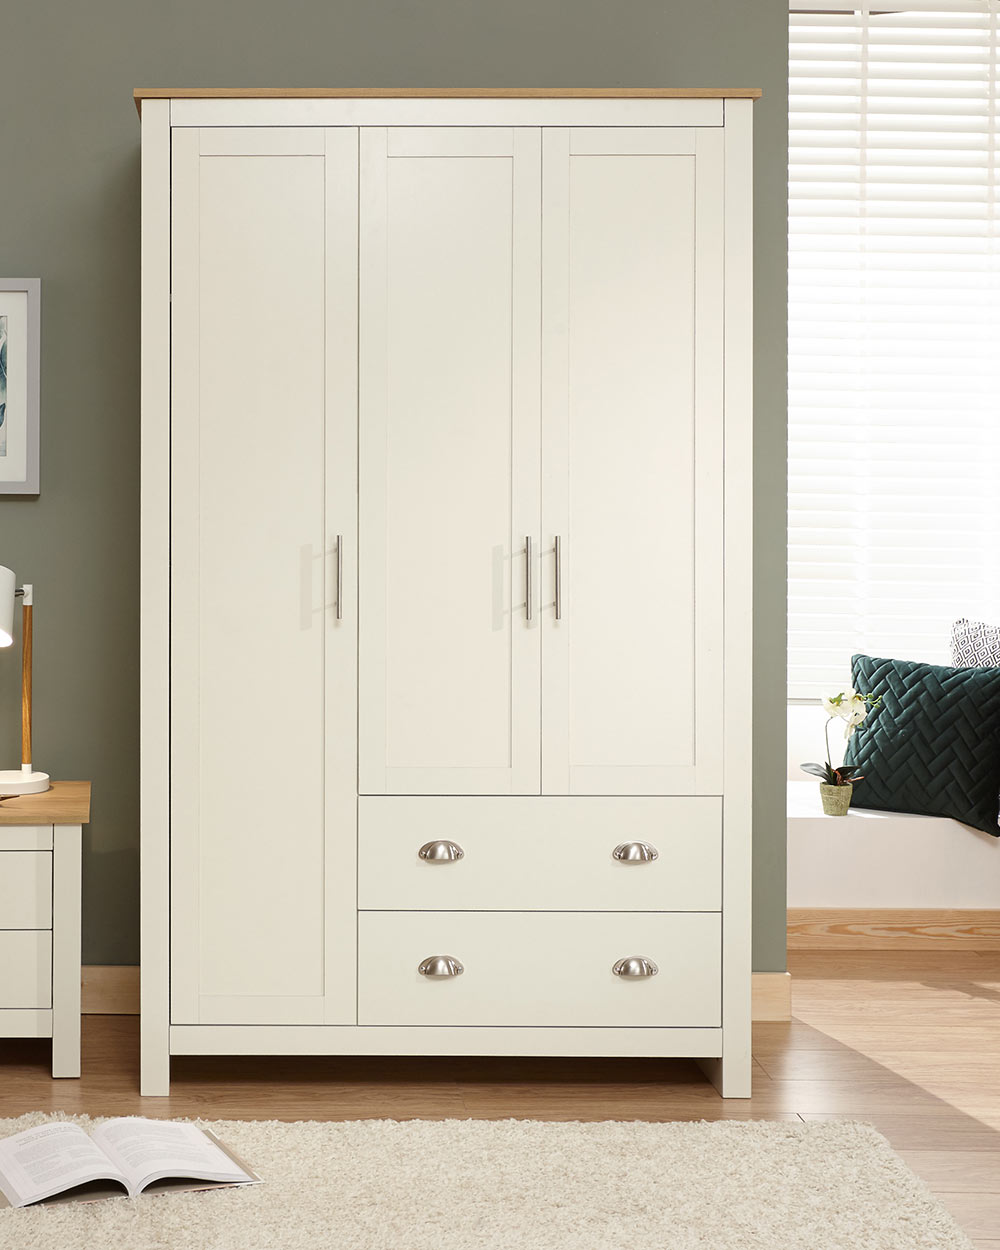 Lancaster 3 door 2 drawer wardrobe shaker style doors in a bedroom lifestyle setting